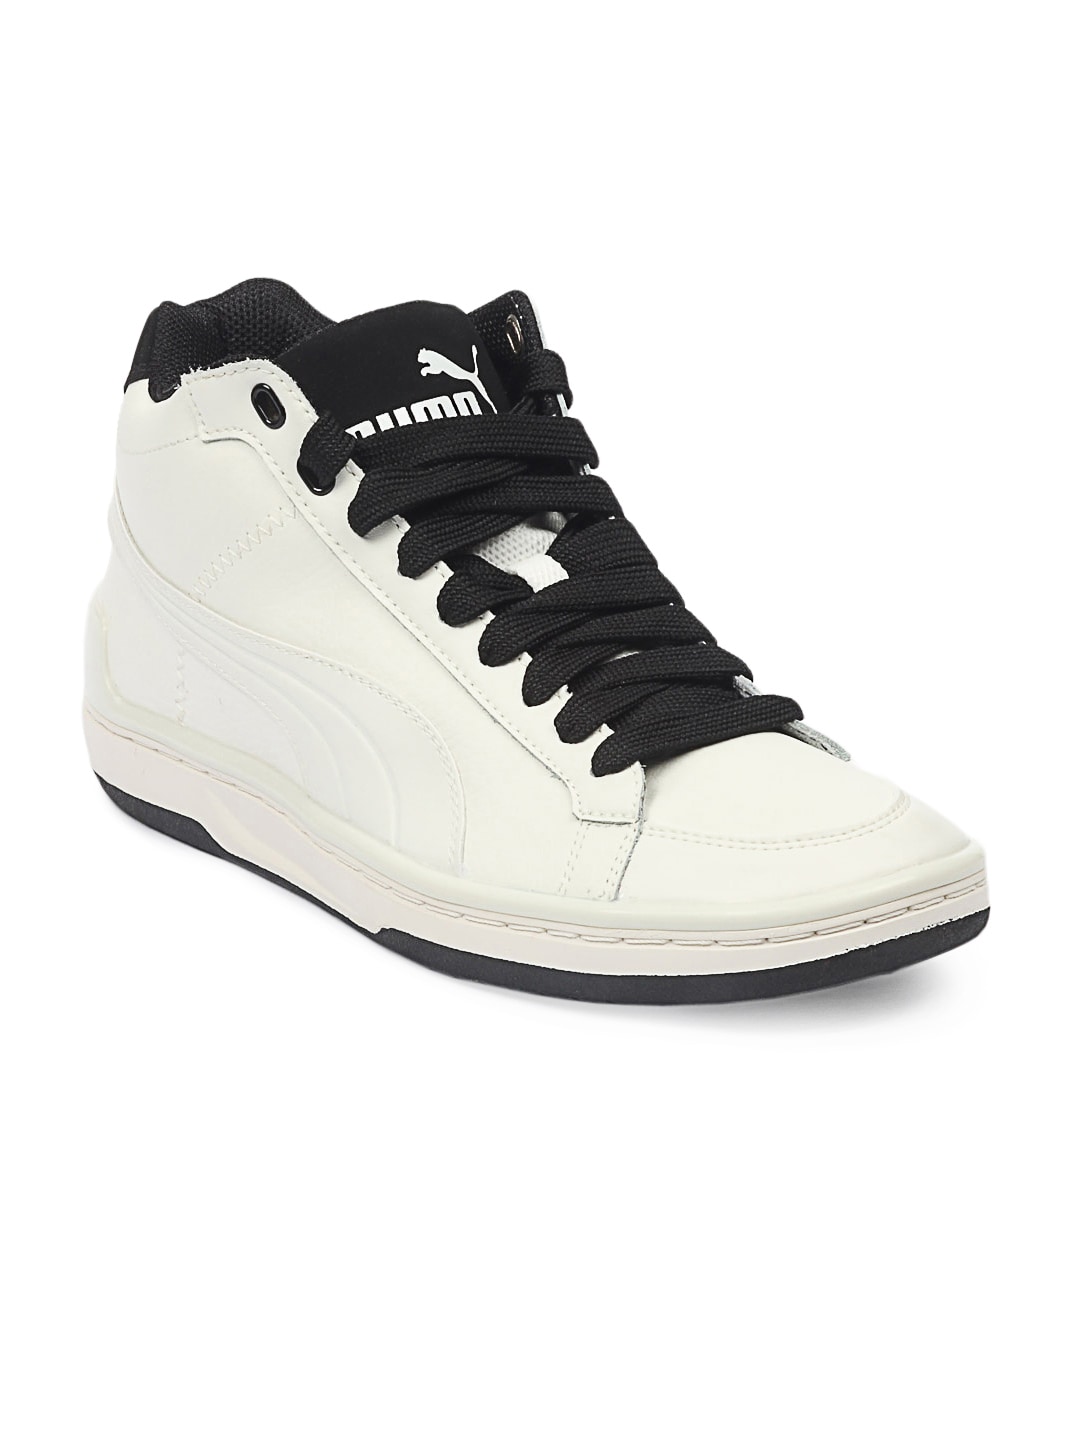 Puma Men White Evo Leather Shoes